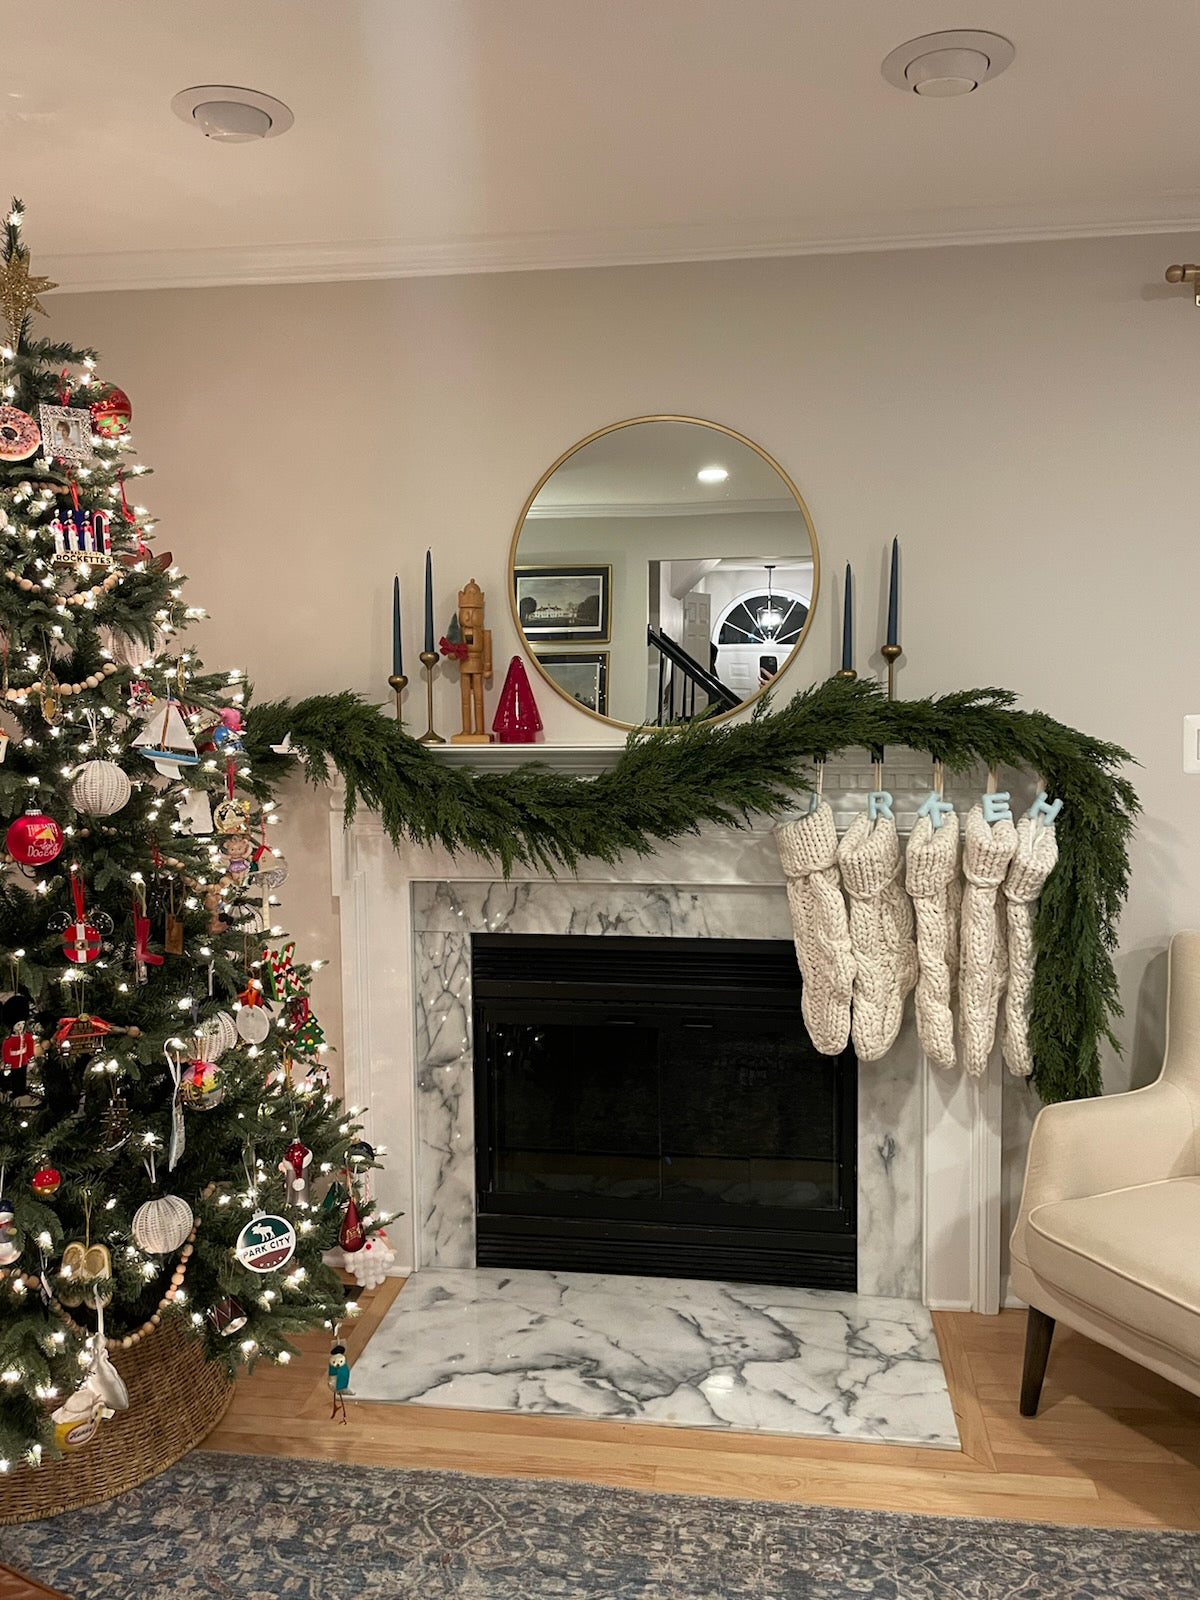 9 ft artificial cedar garland on mantle for Christmas home decor. 